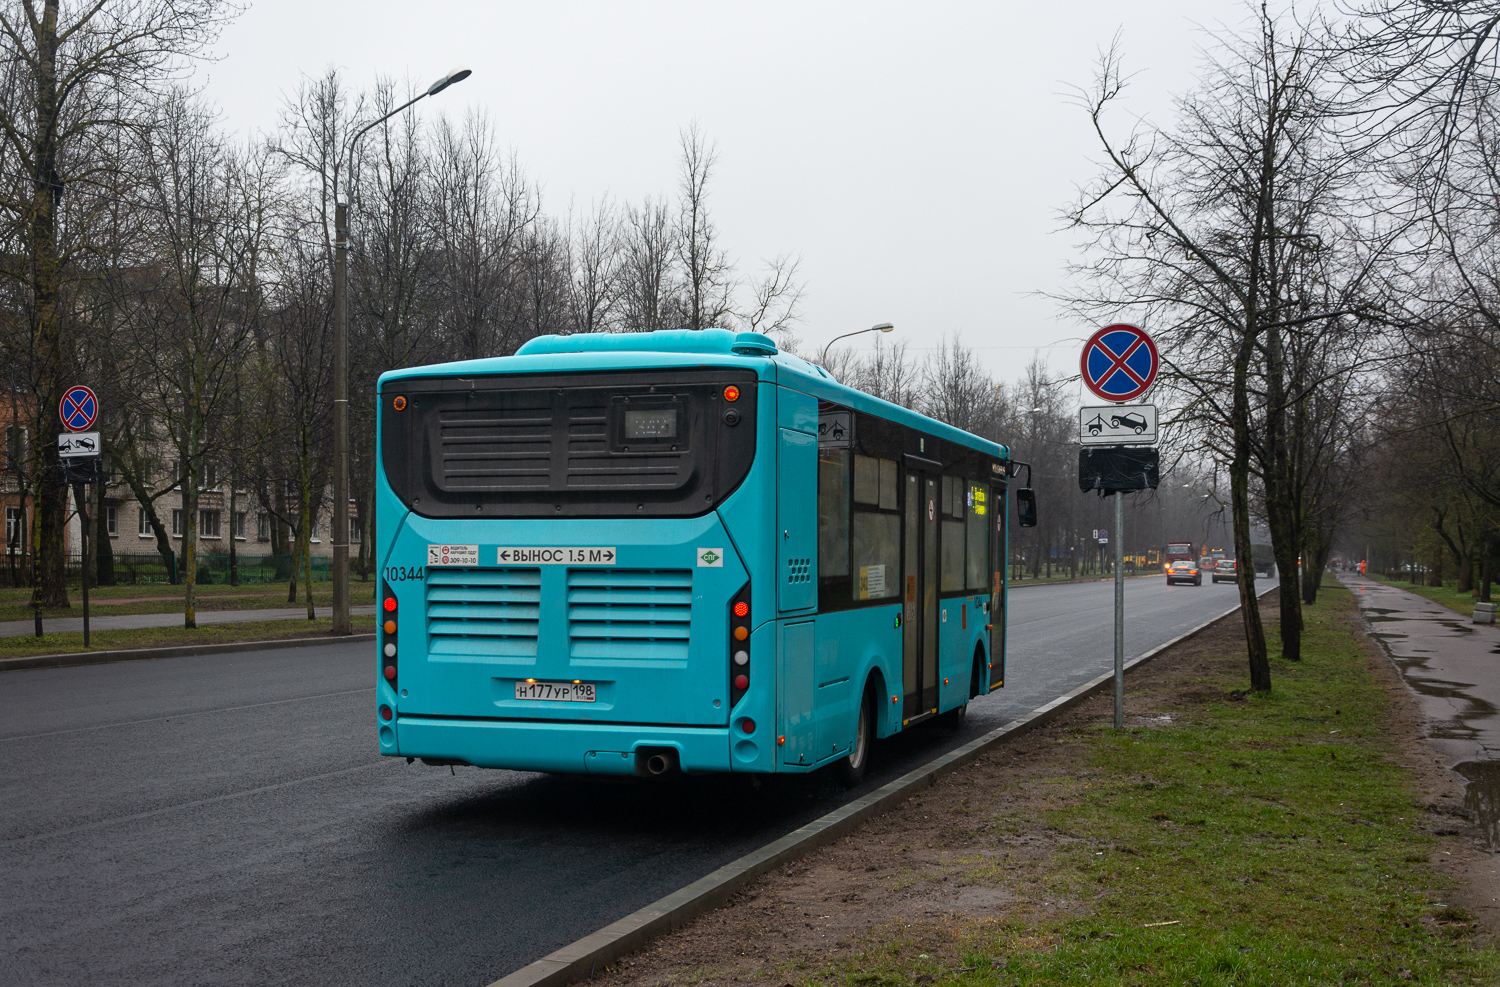 Saint Petersburg, Volgabus-4298.G4 (LNG) # 10344